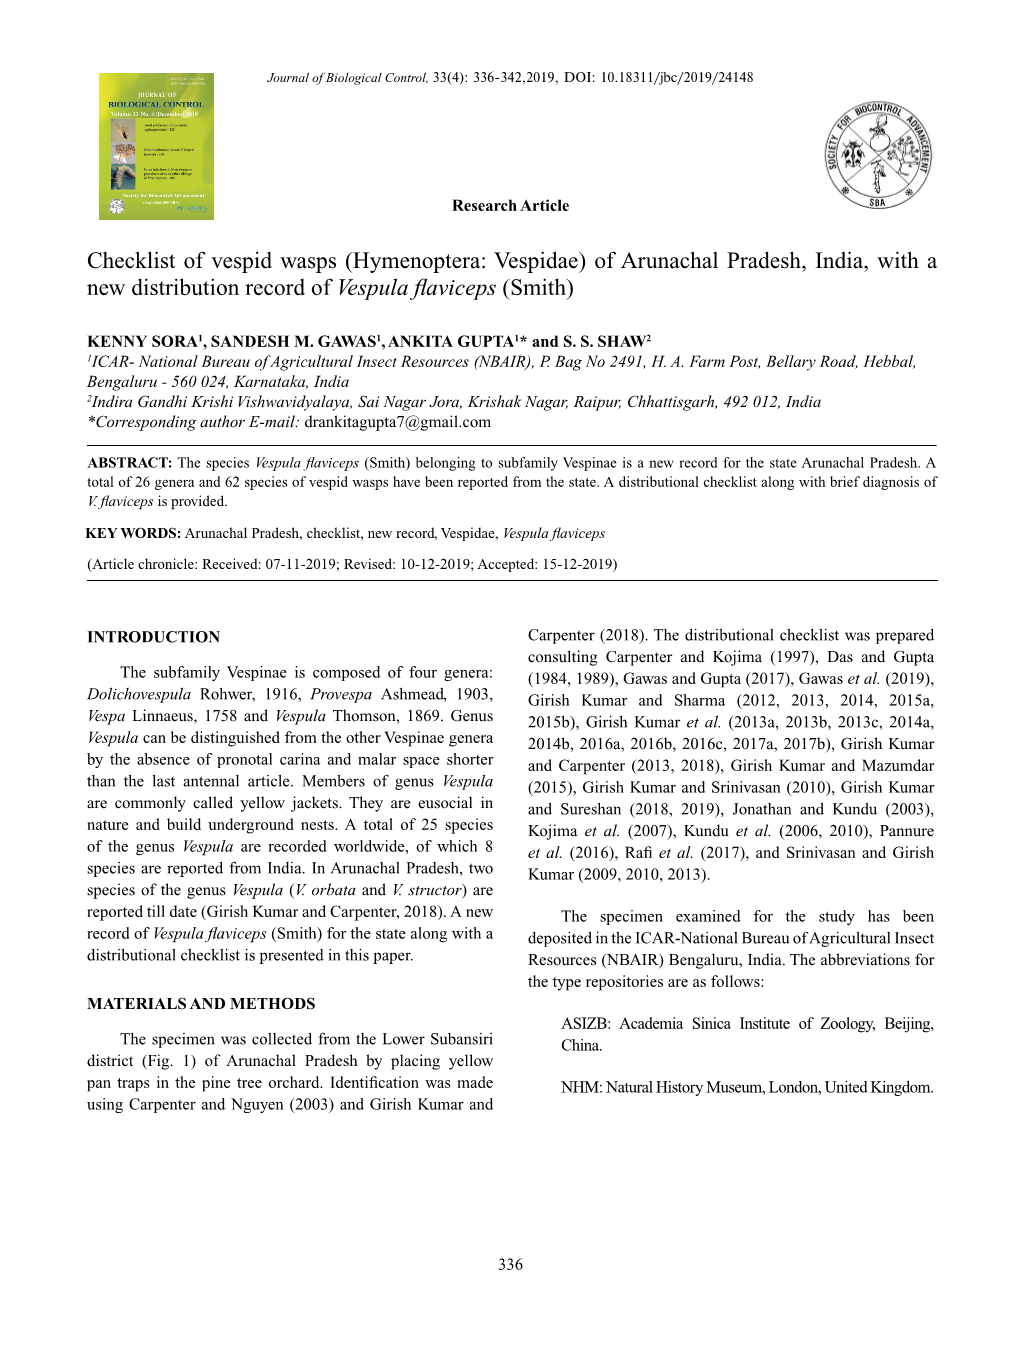 Checklist of Vespid Wasps (Hymenoptera: Vespidae) of Arunachal Pradesh, India, with a New Distribution Record of Vespula Flaviceps (Smith)